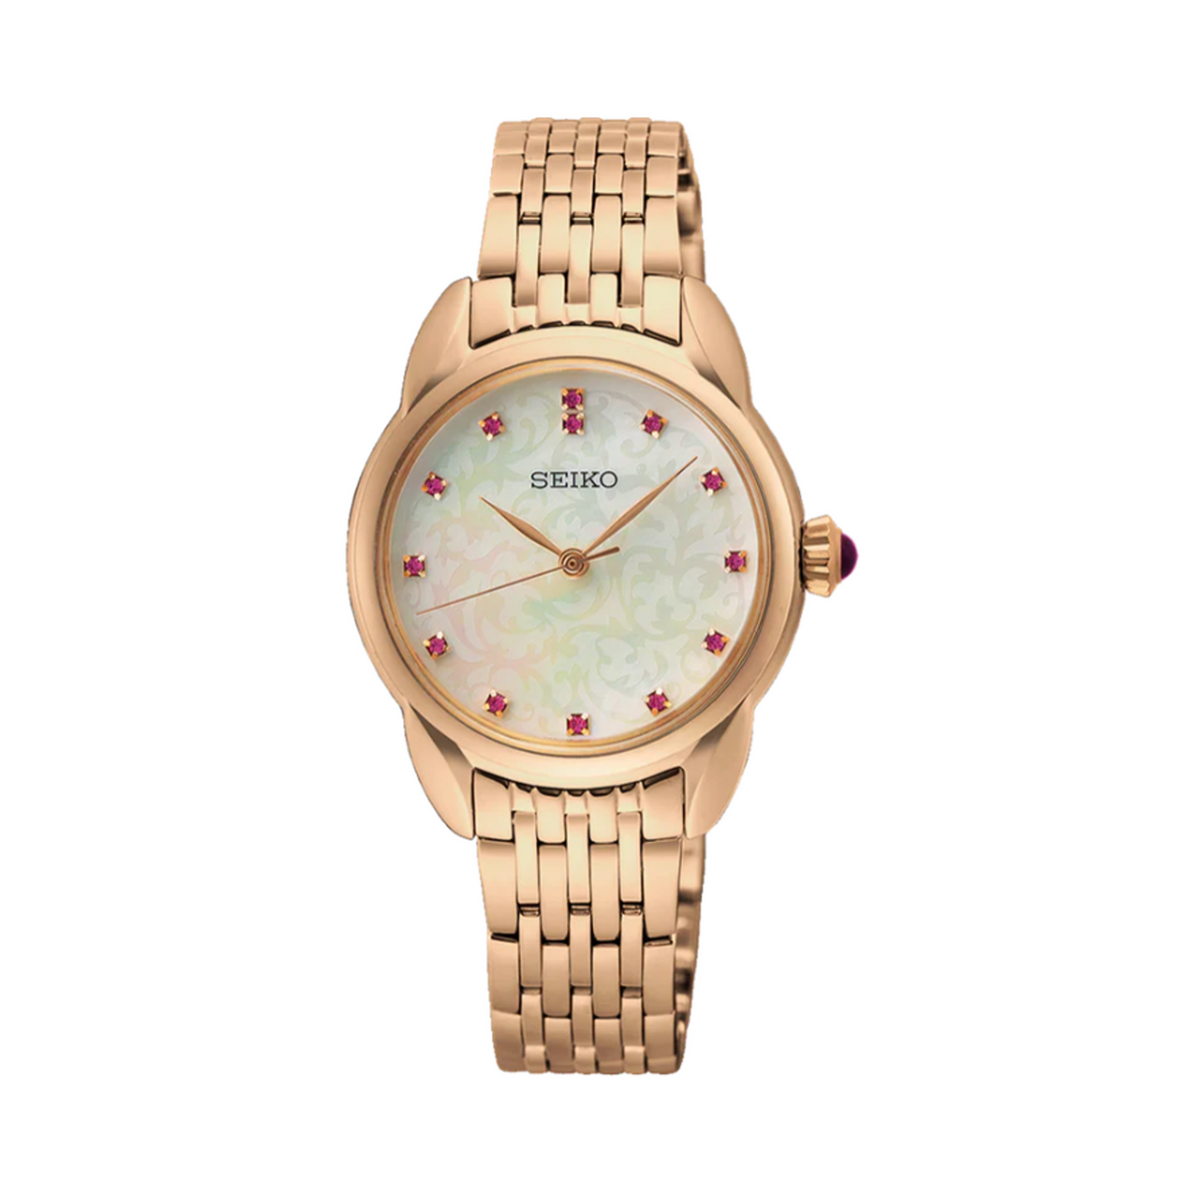 Seiko Caprice Women's 28.70mm Rose Quartz Watch